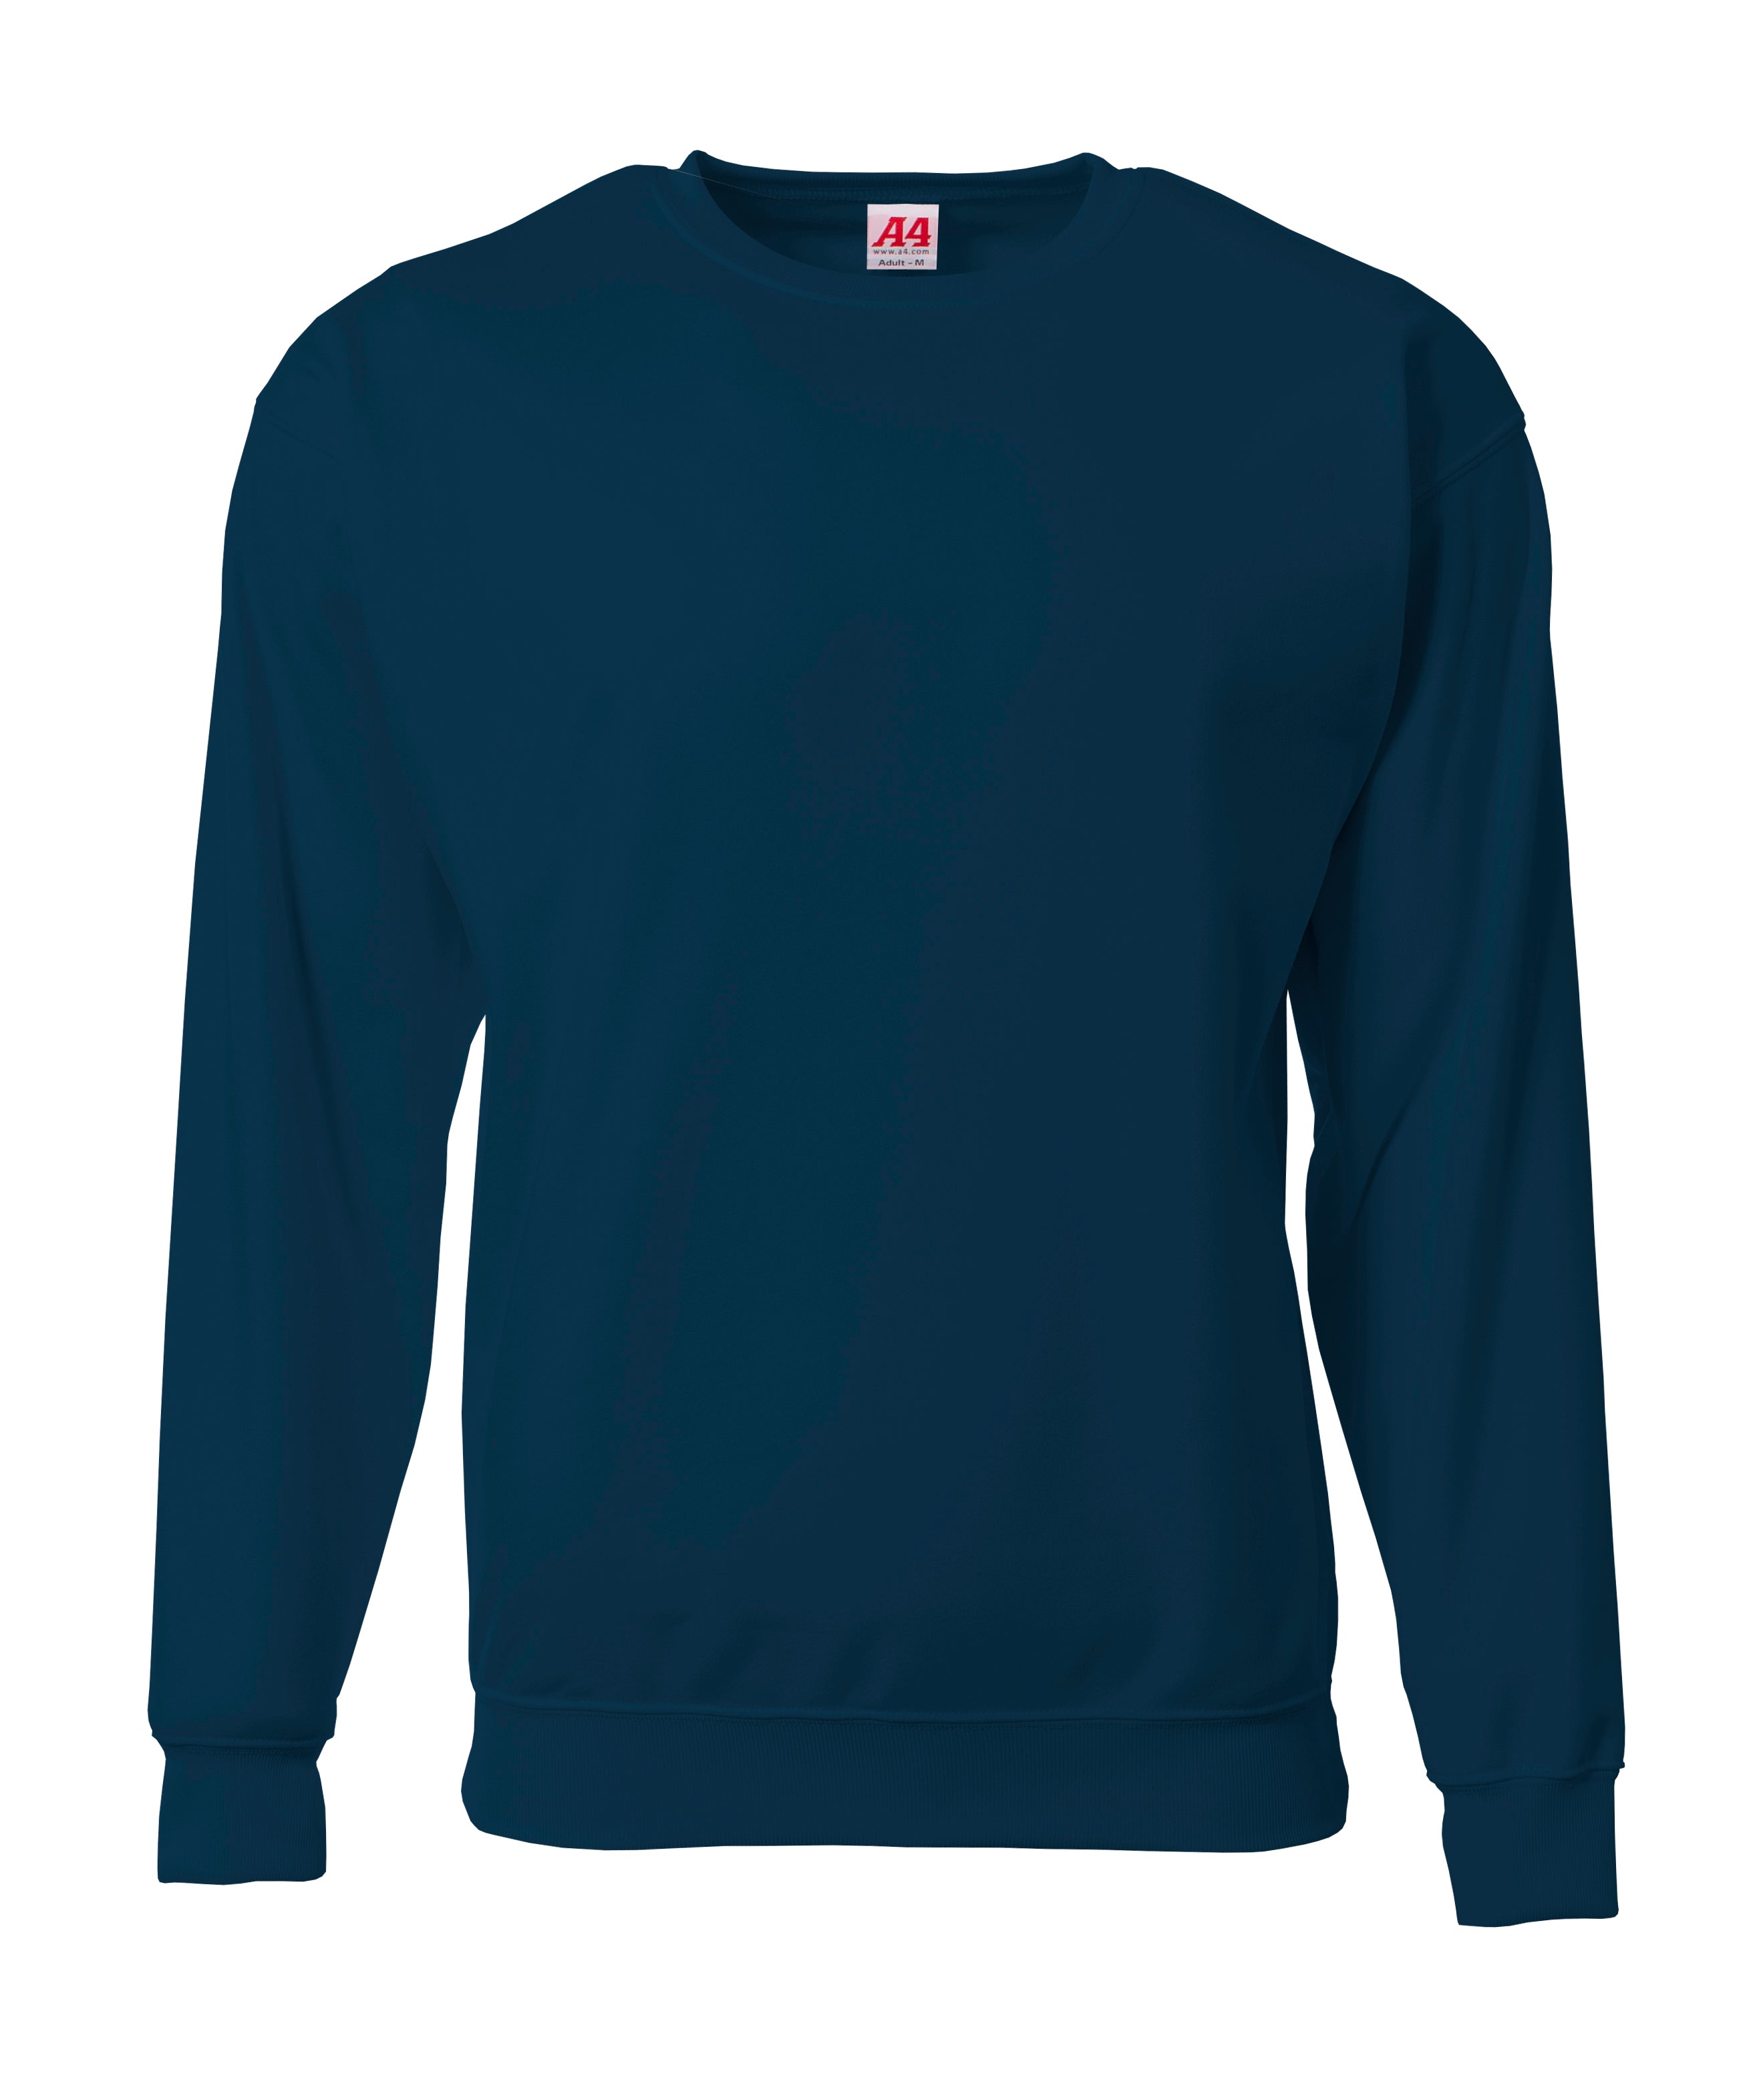 A4 Sprint Fleece Sweatshirt